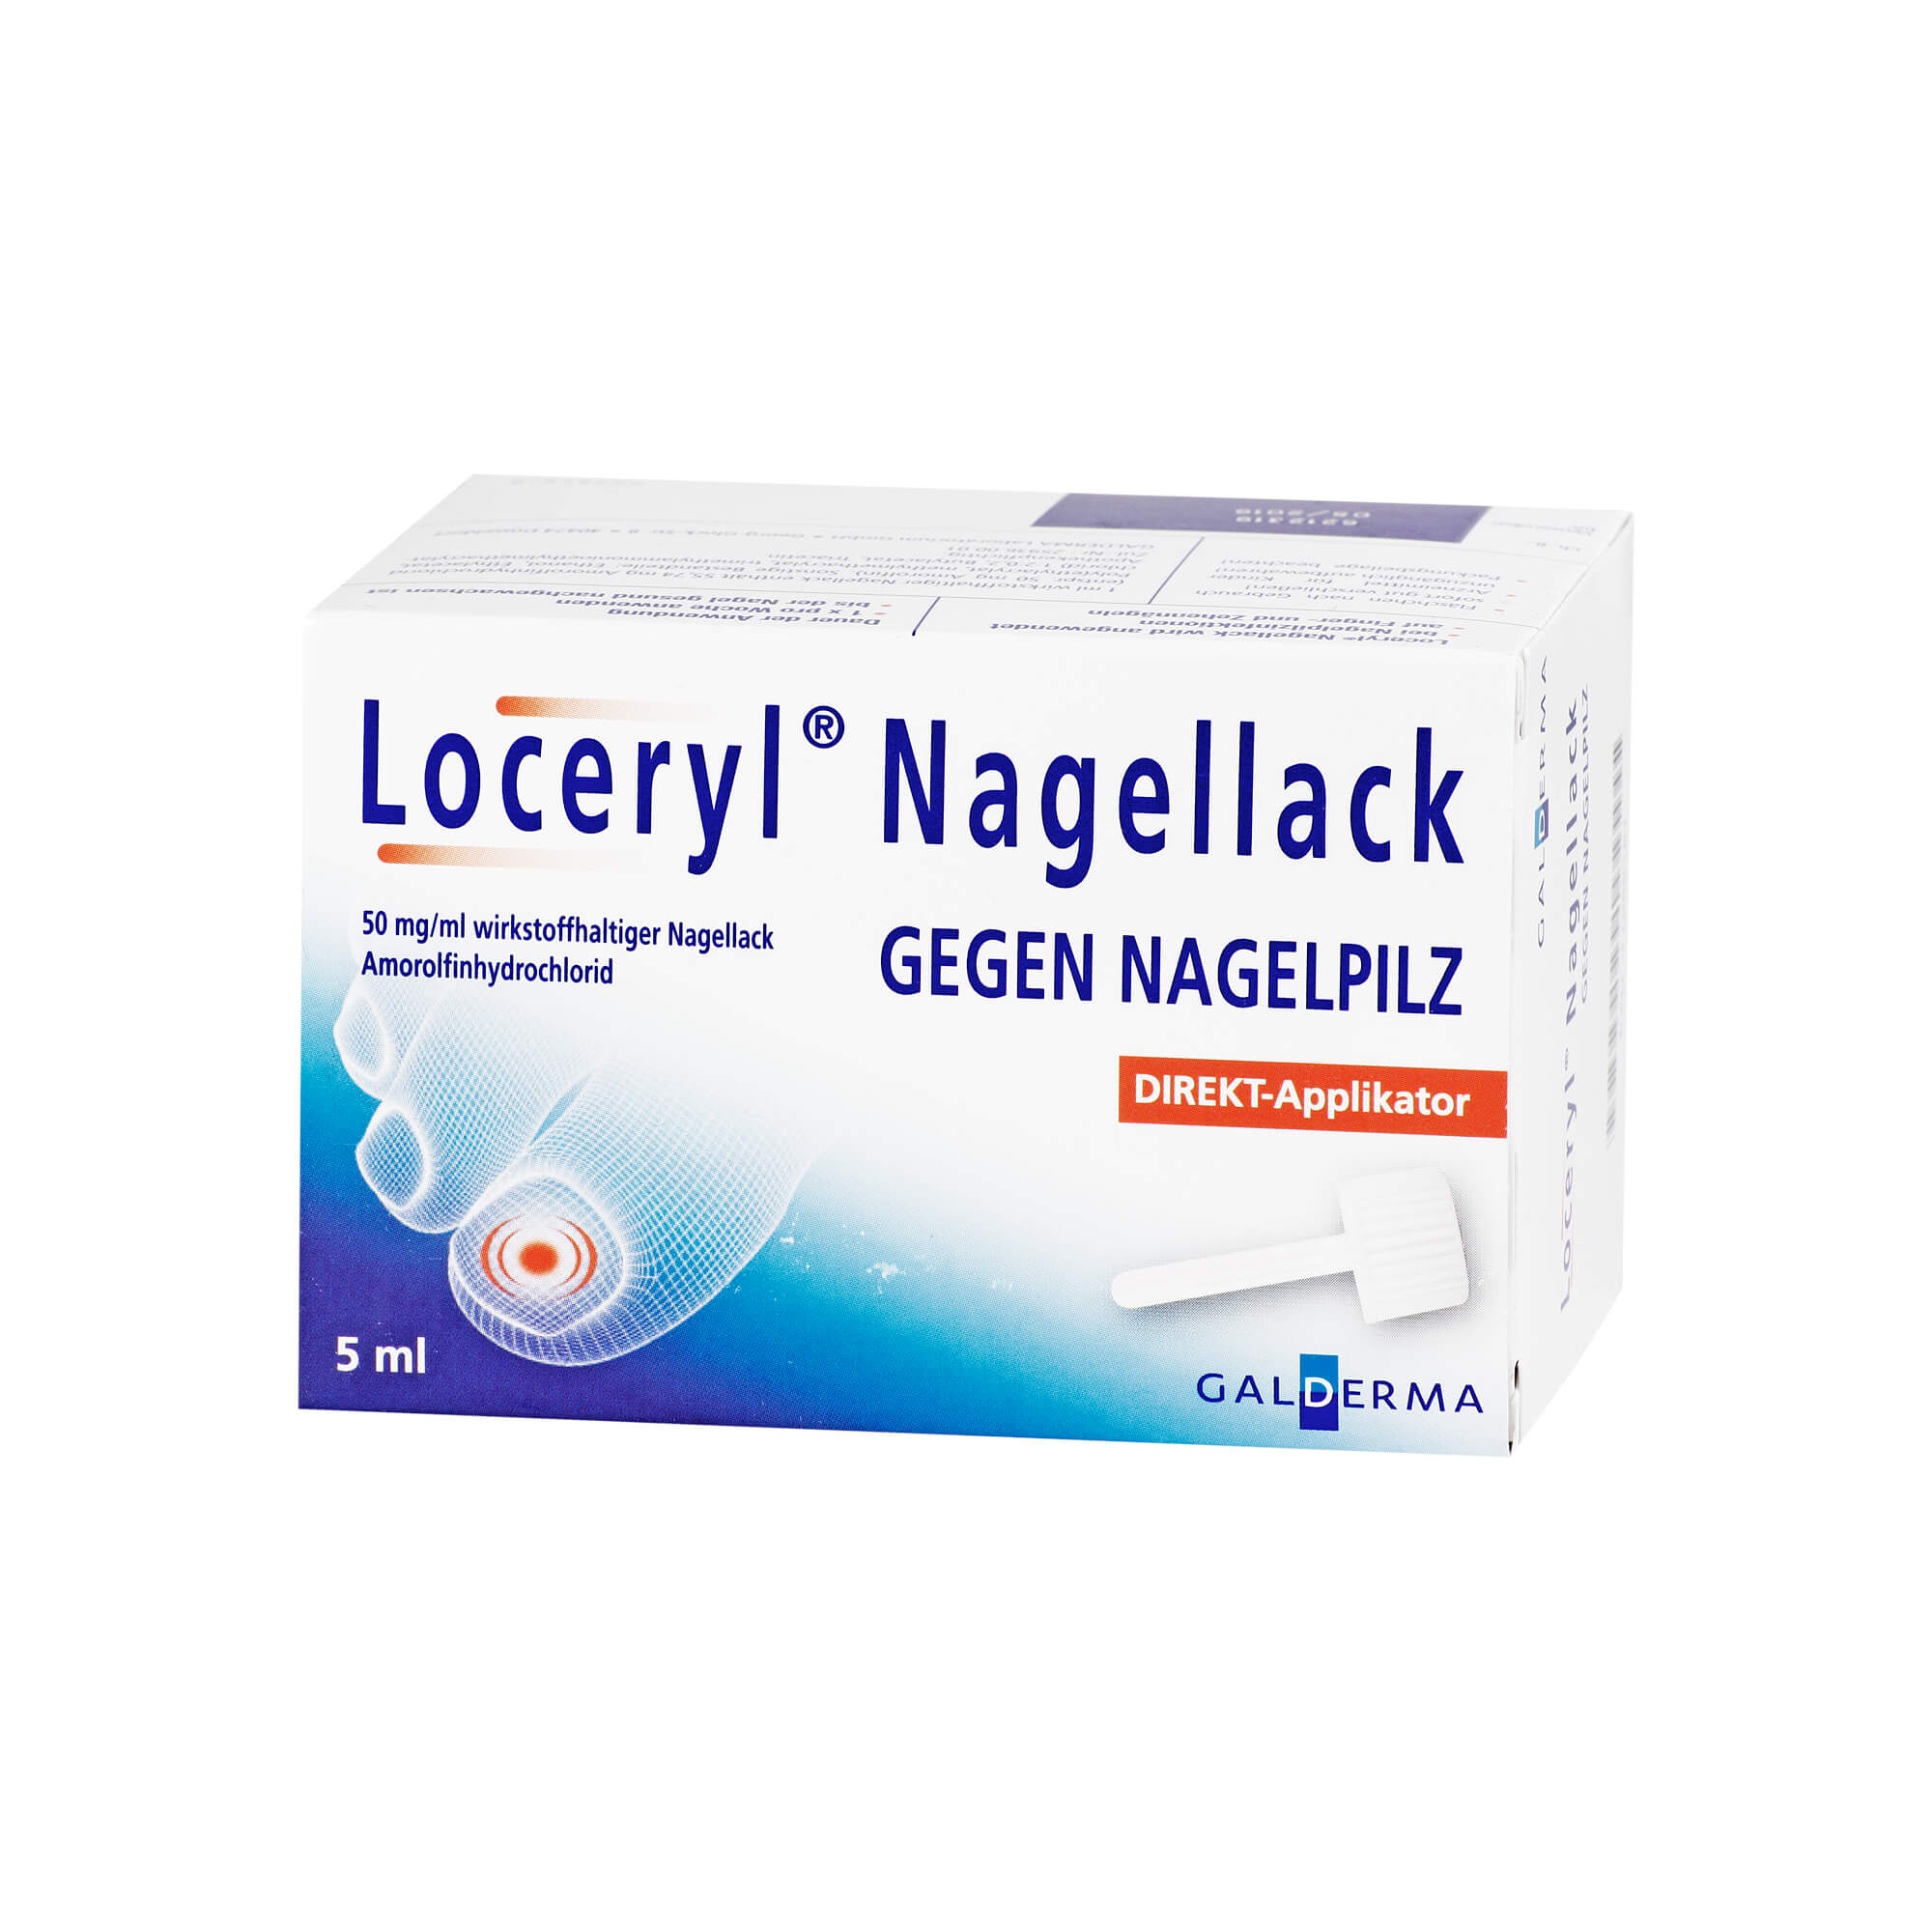 Loceryl Nagellack gegen Nagelpilz Direkt-Applikator